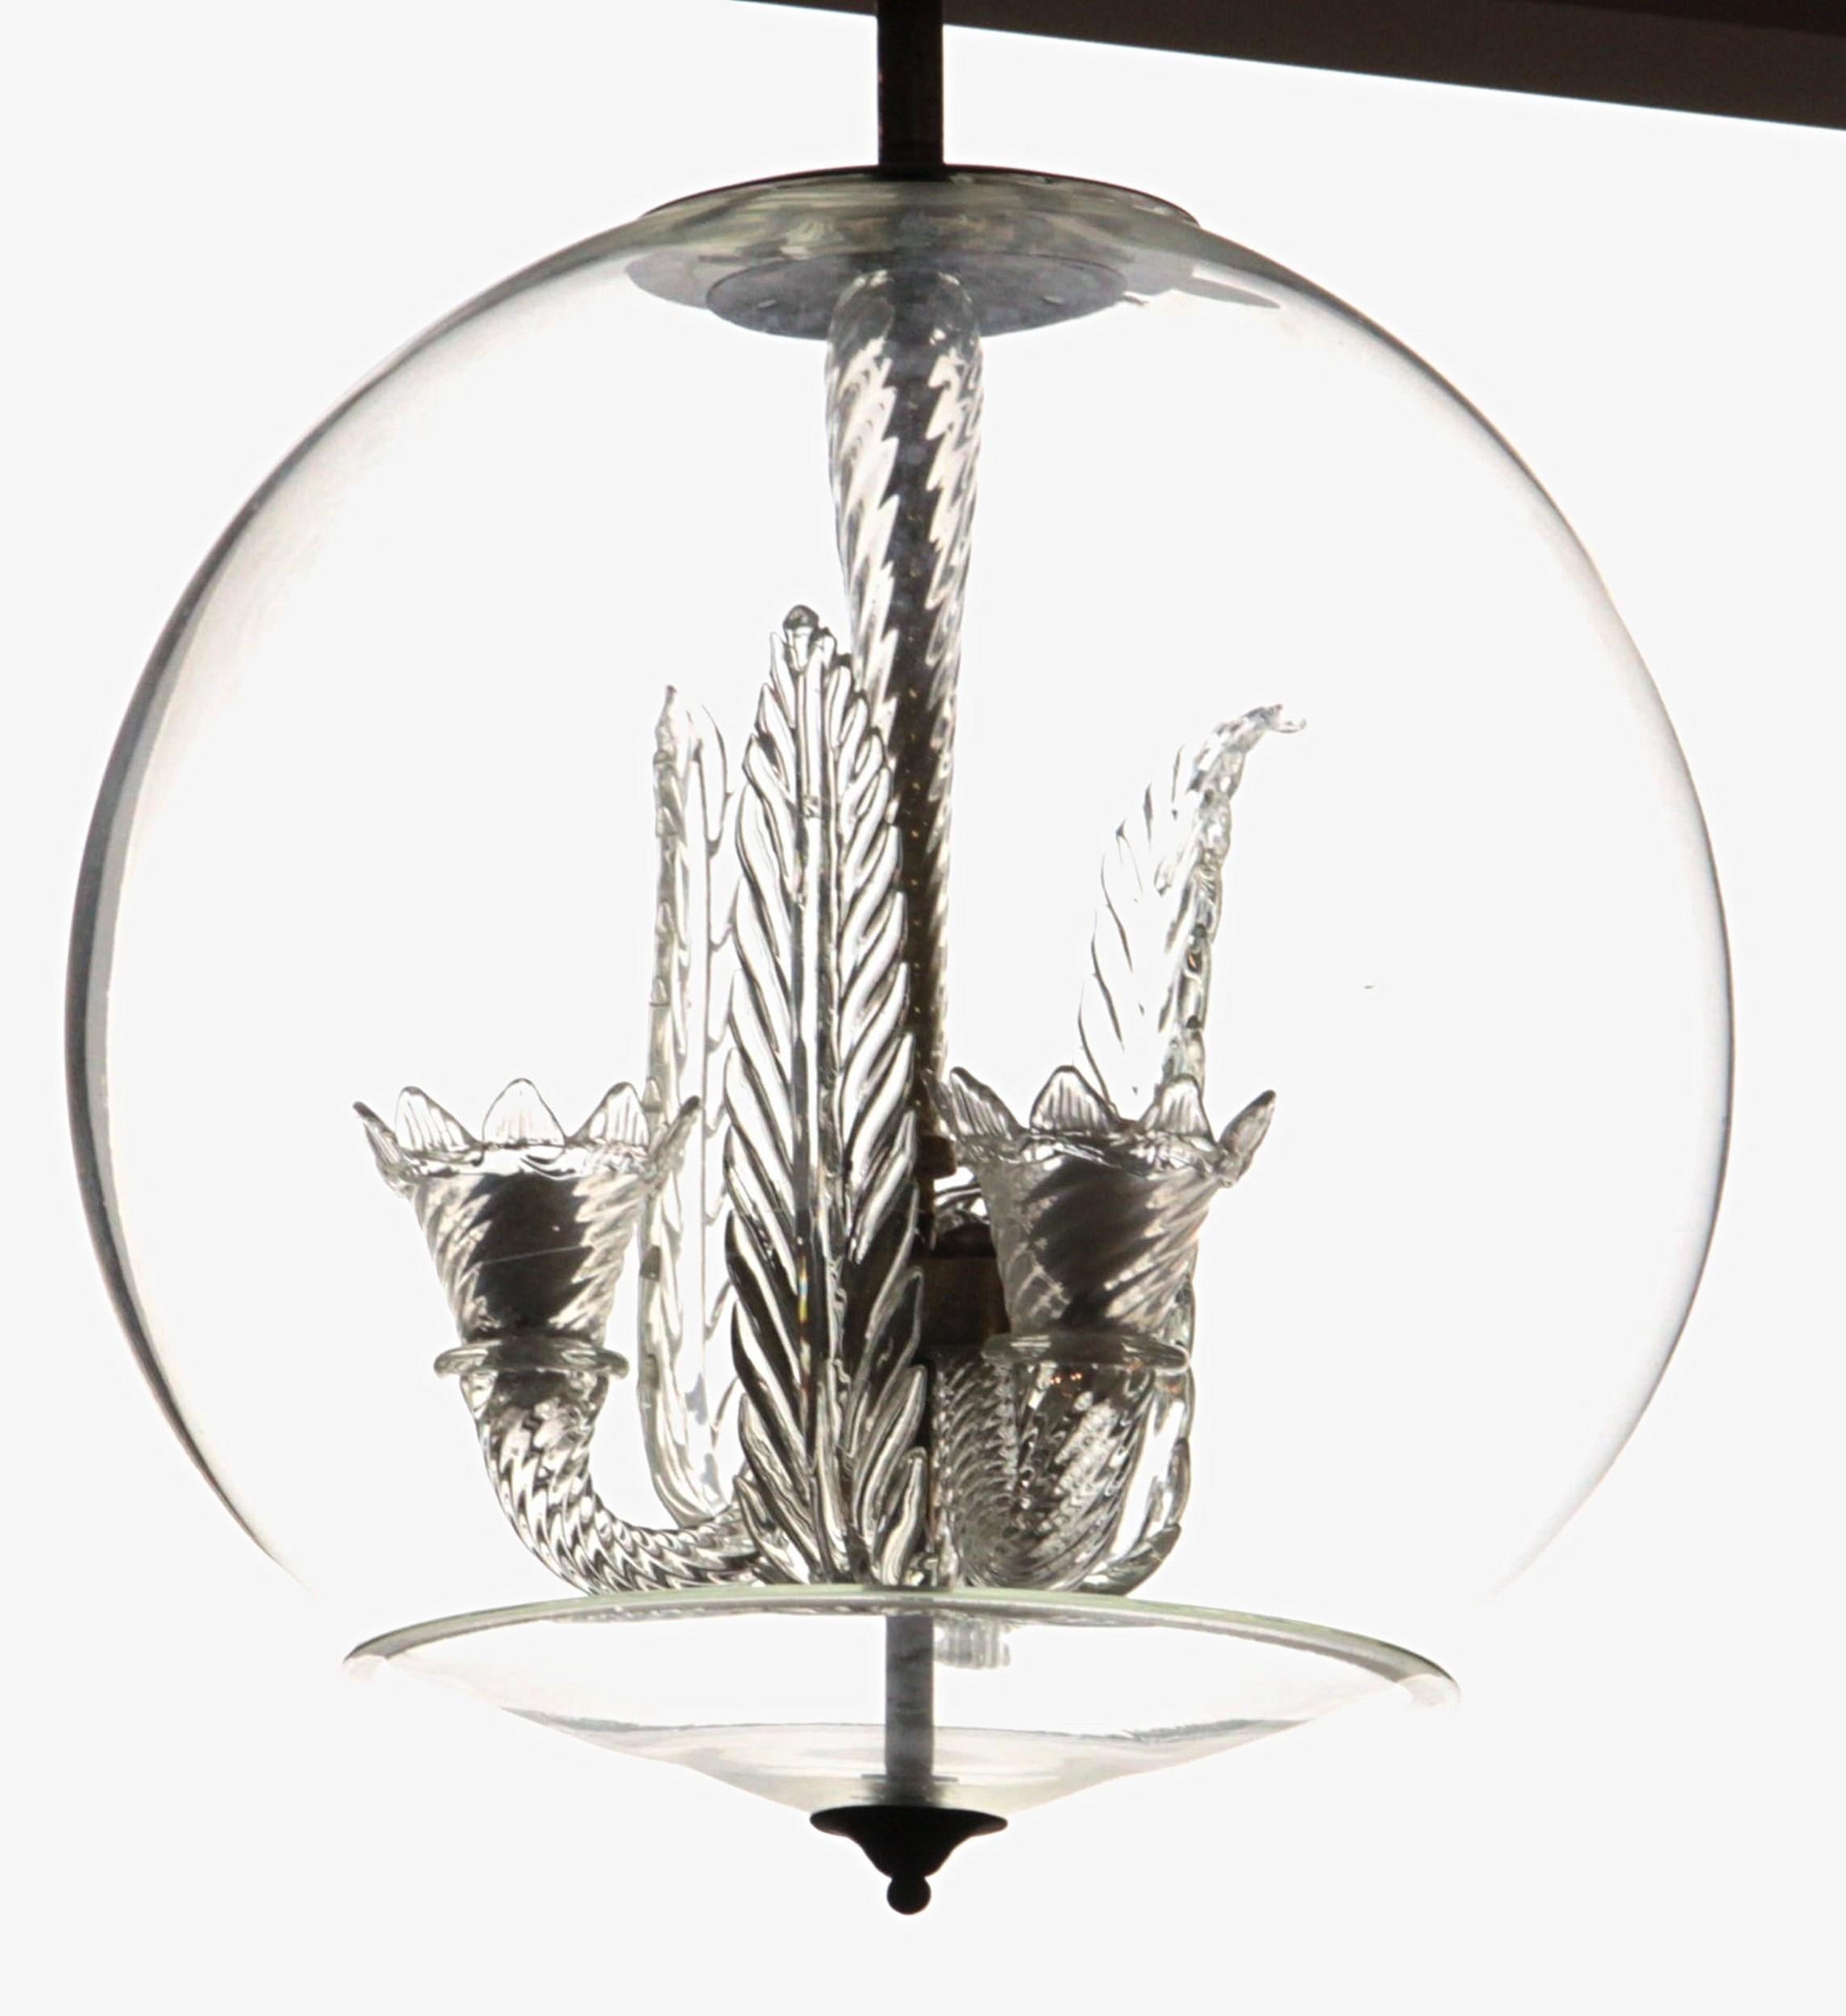 Tommaso Buzzi for Venini, Three Arms Chandelier Inside a Glass Sphere, 1930s 2